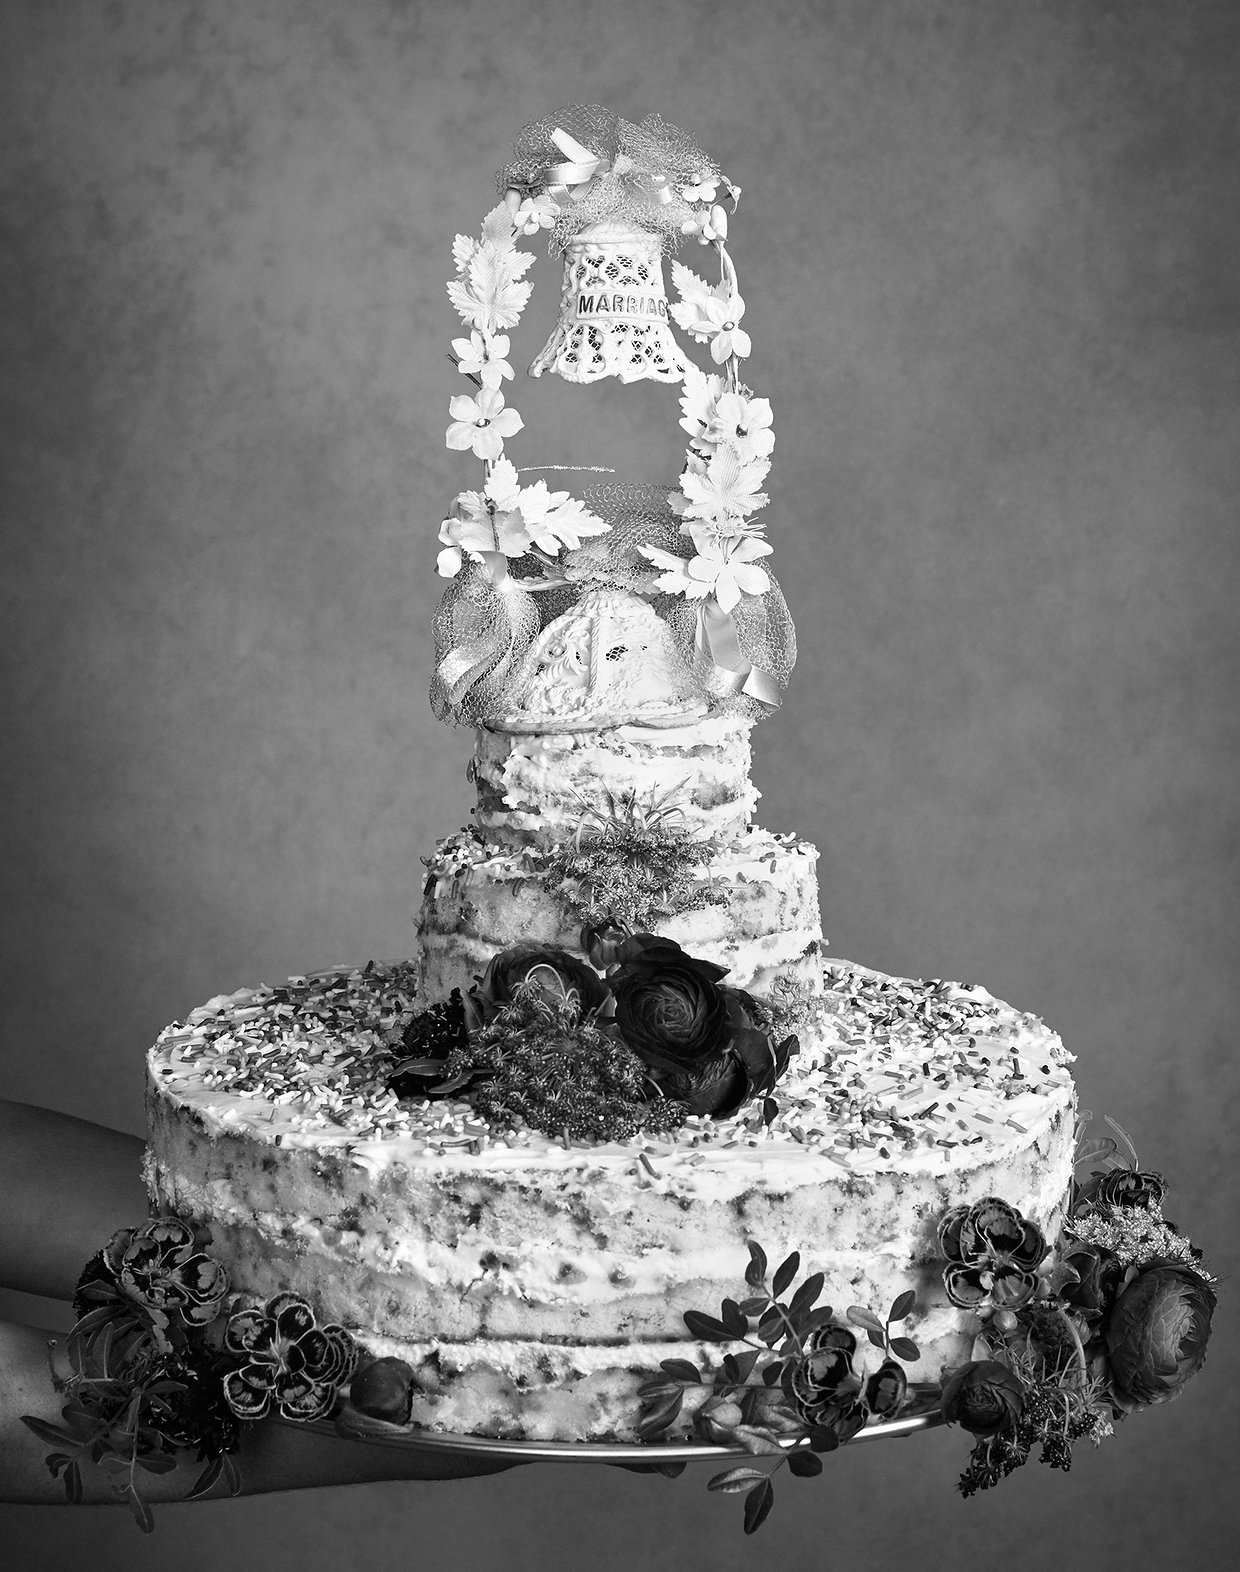 Shoshanna from Girls wedding cake